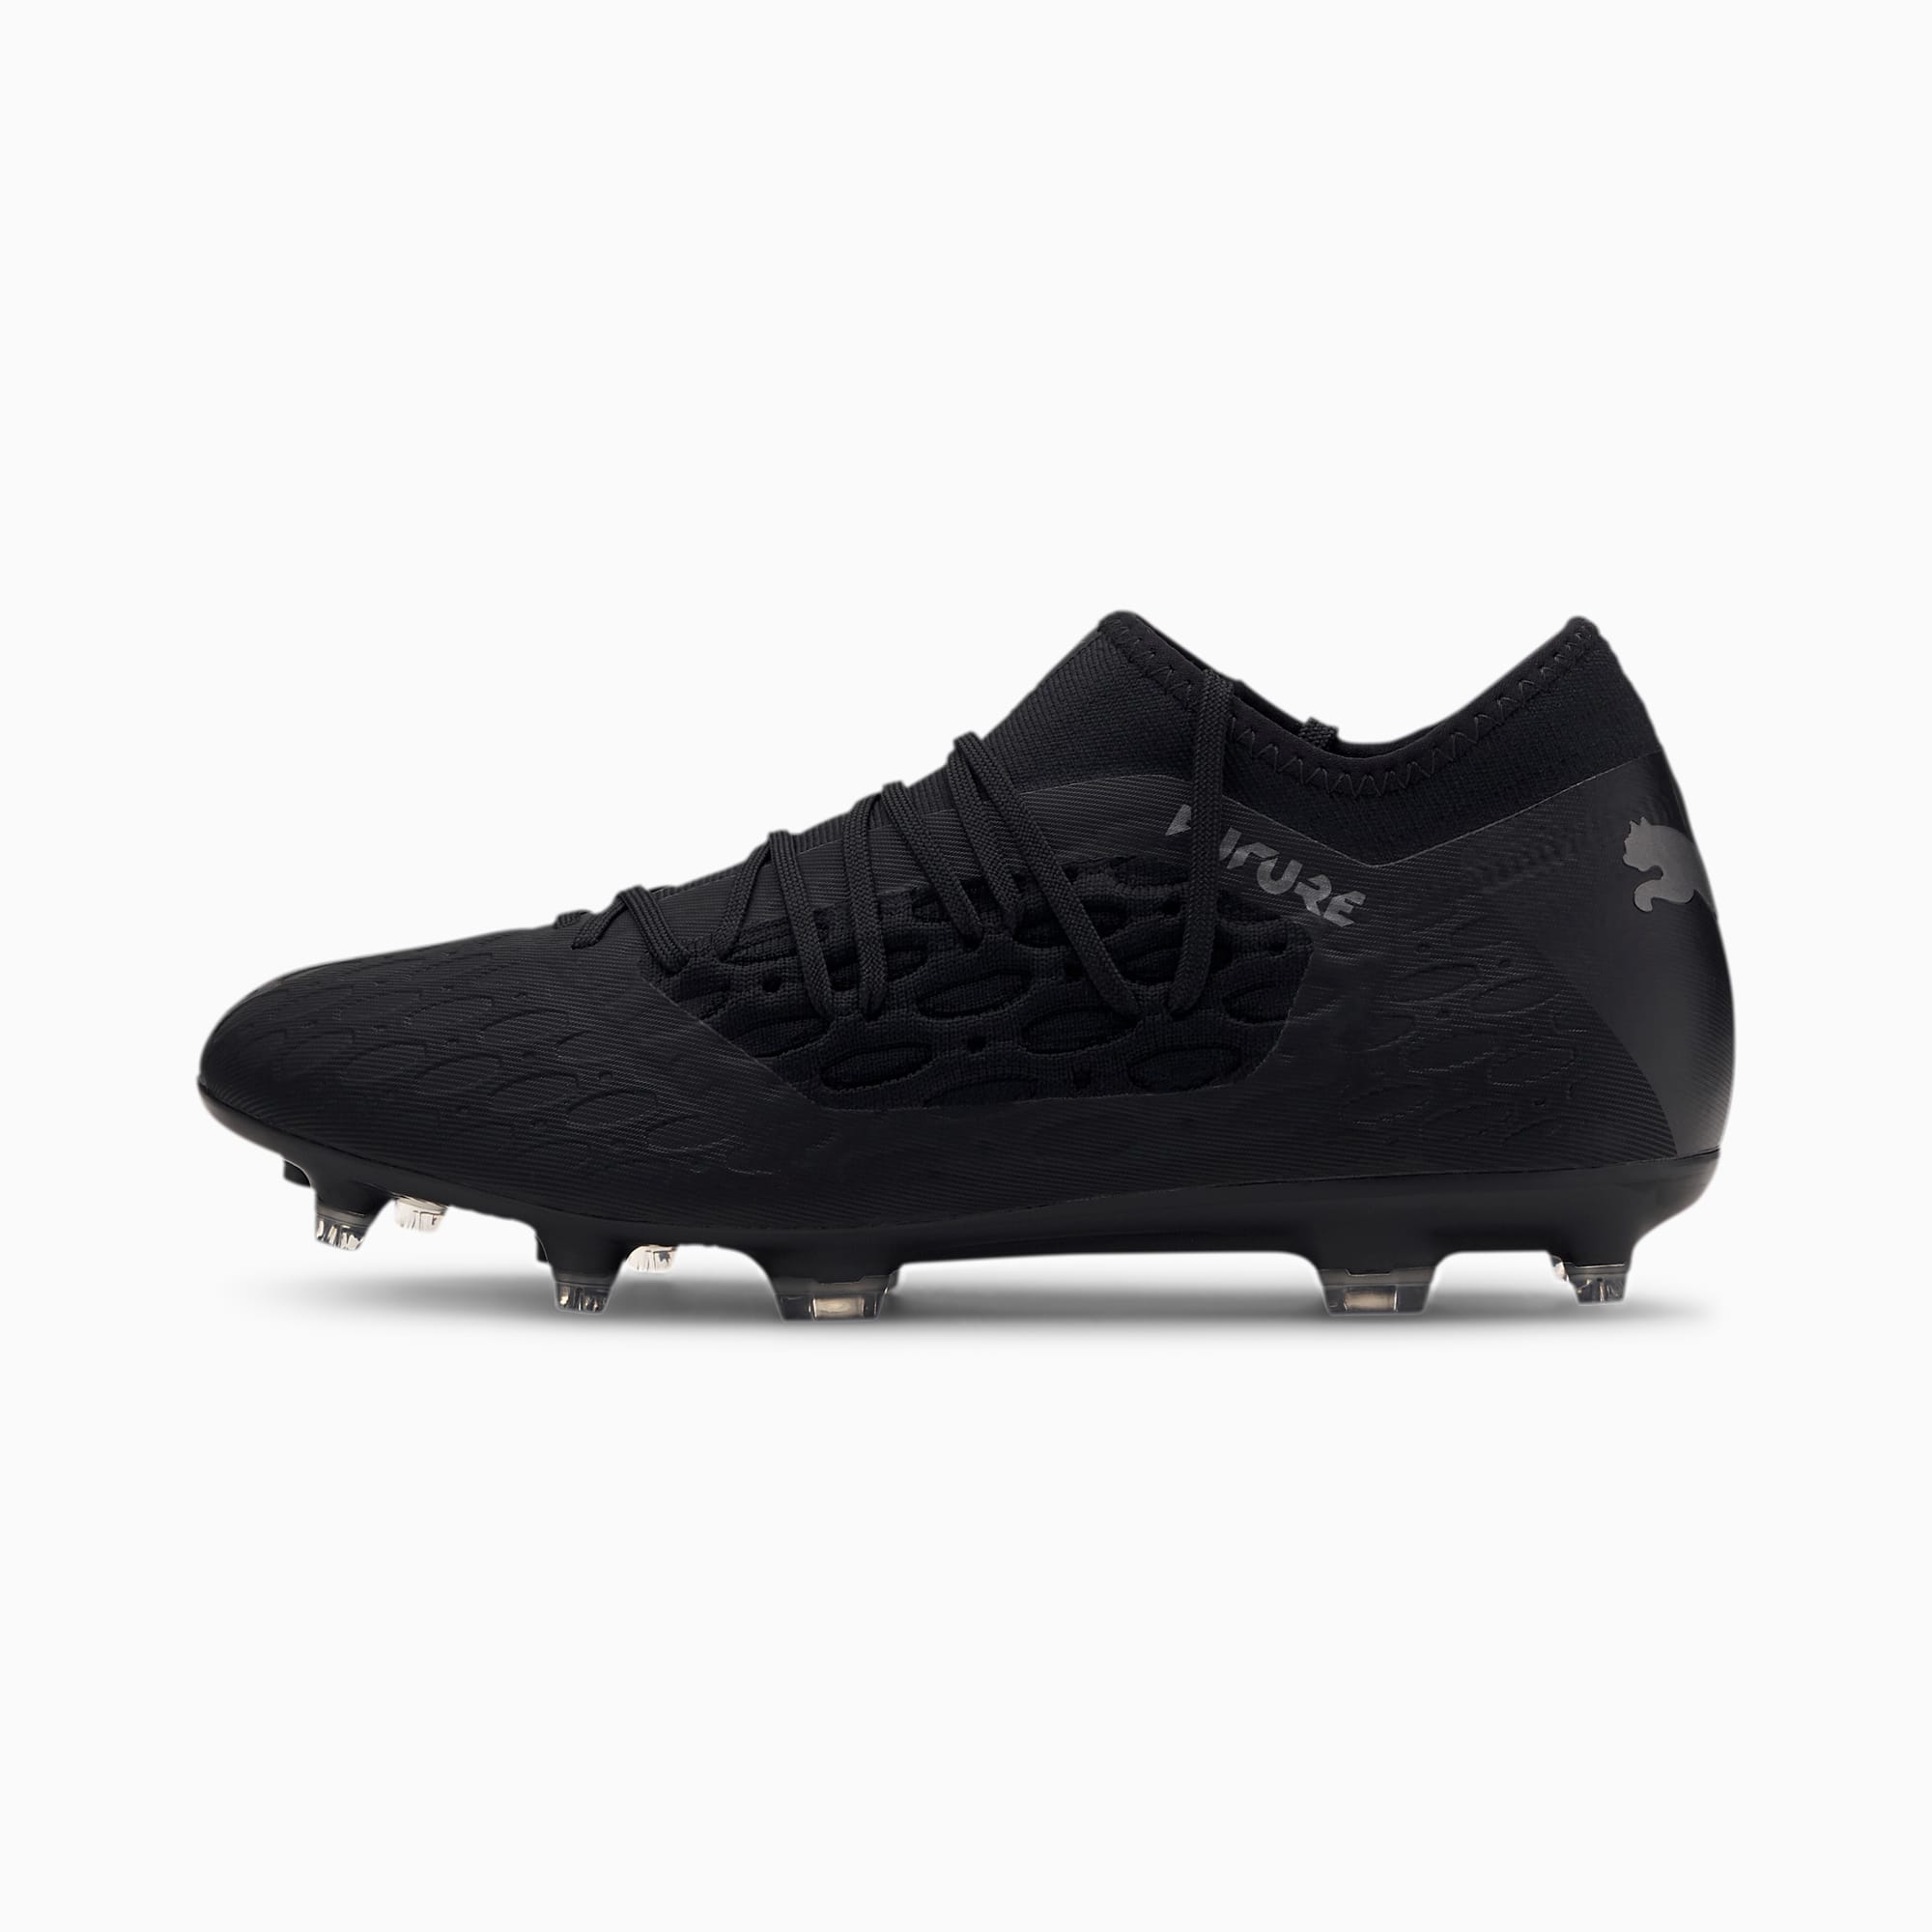 puma black football shoes